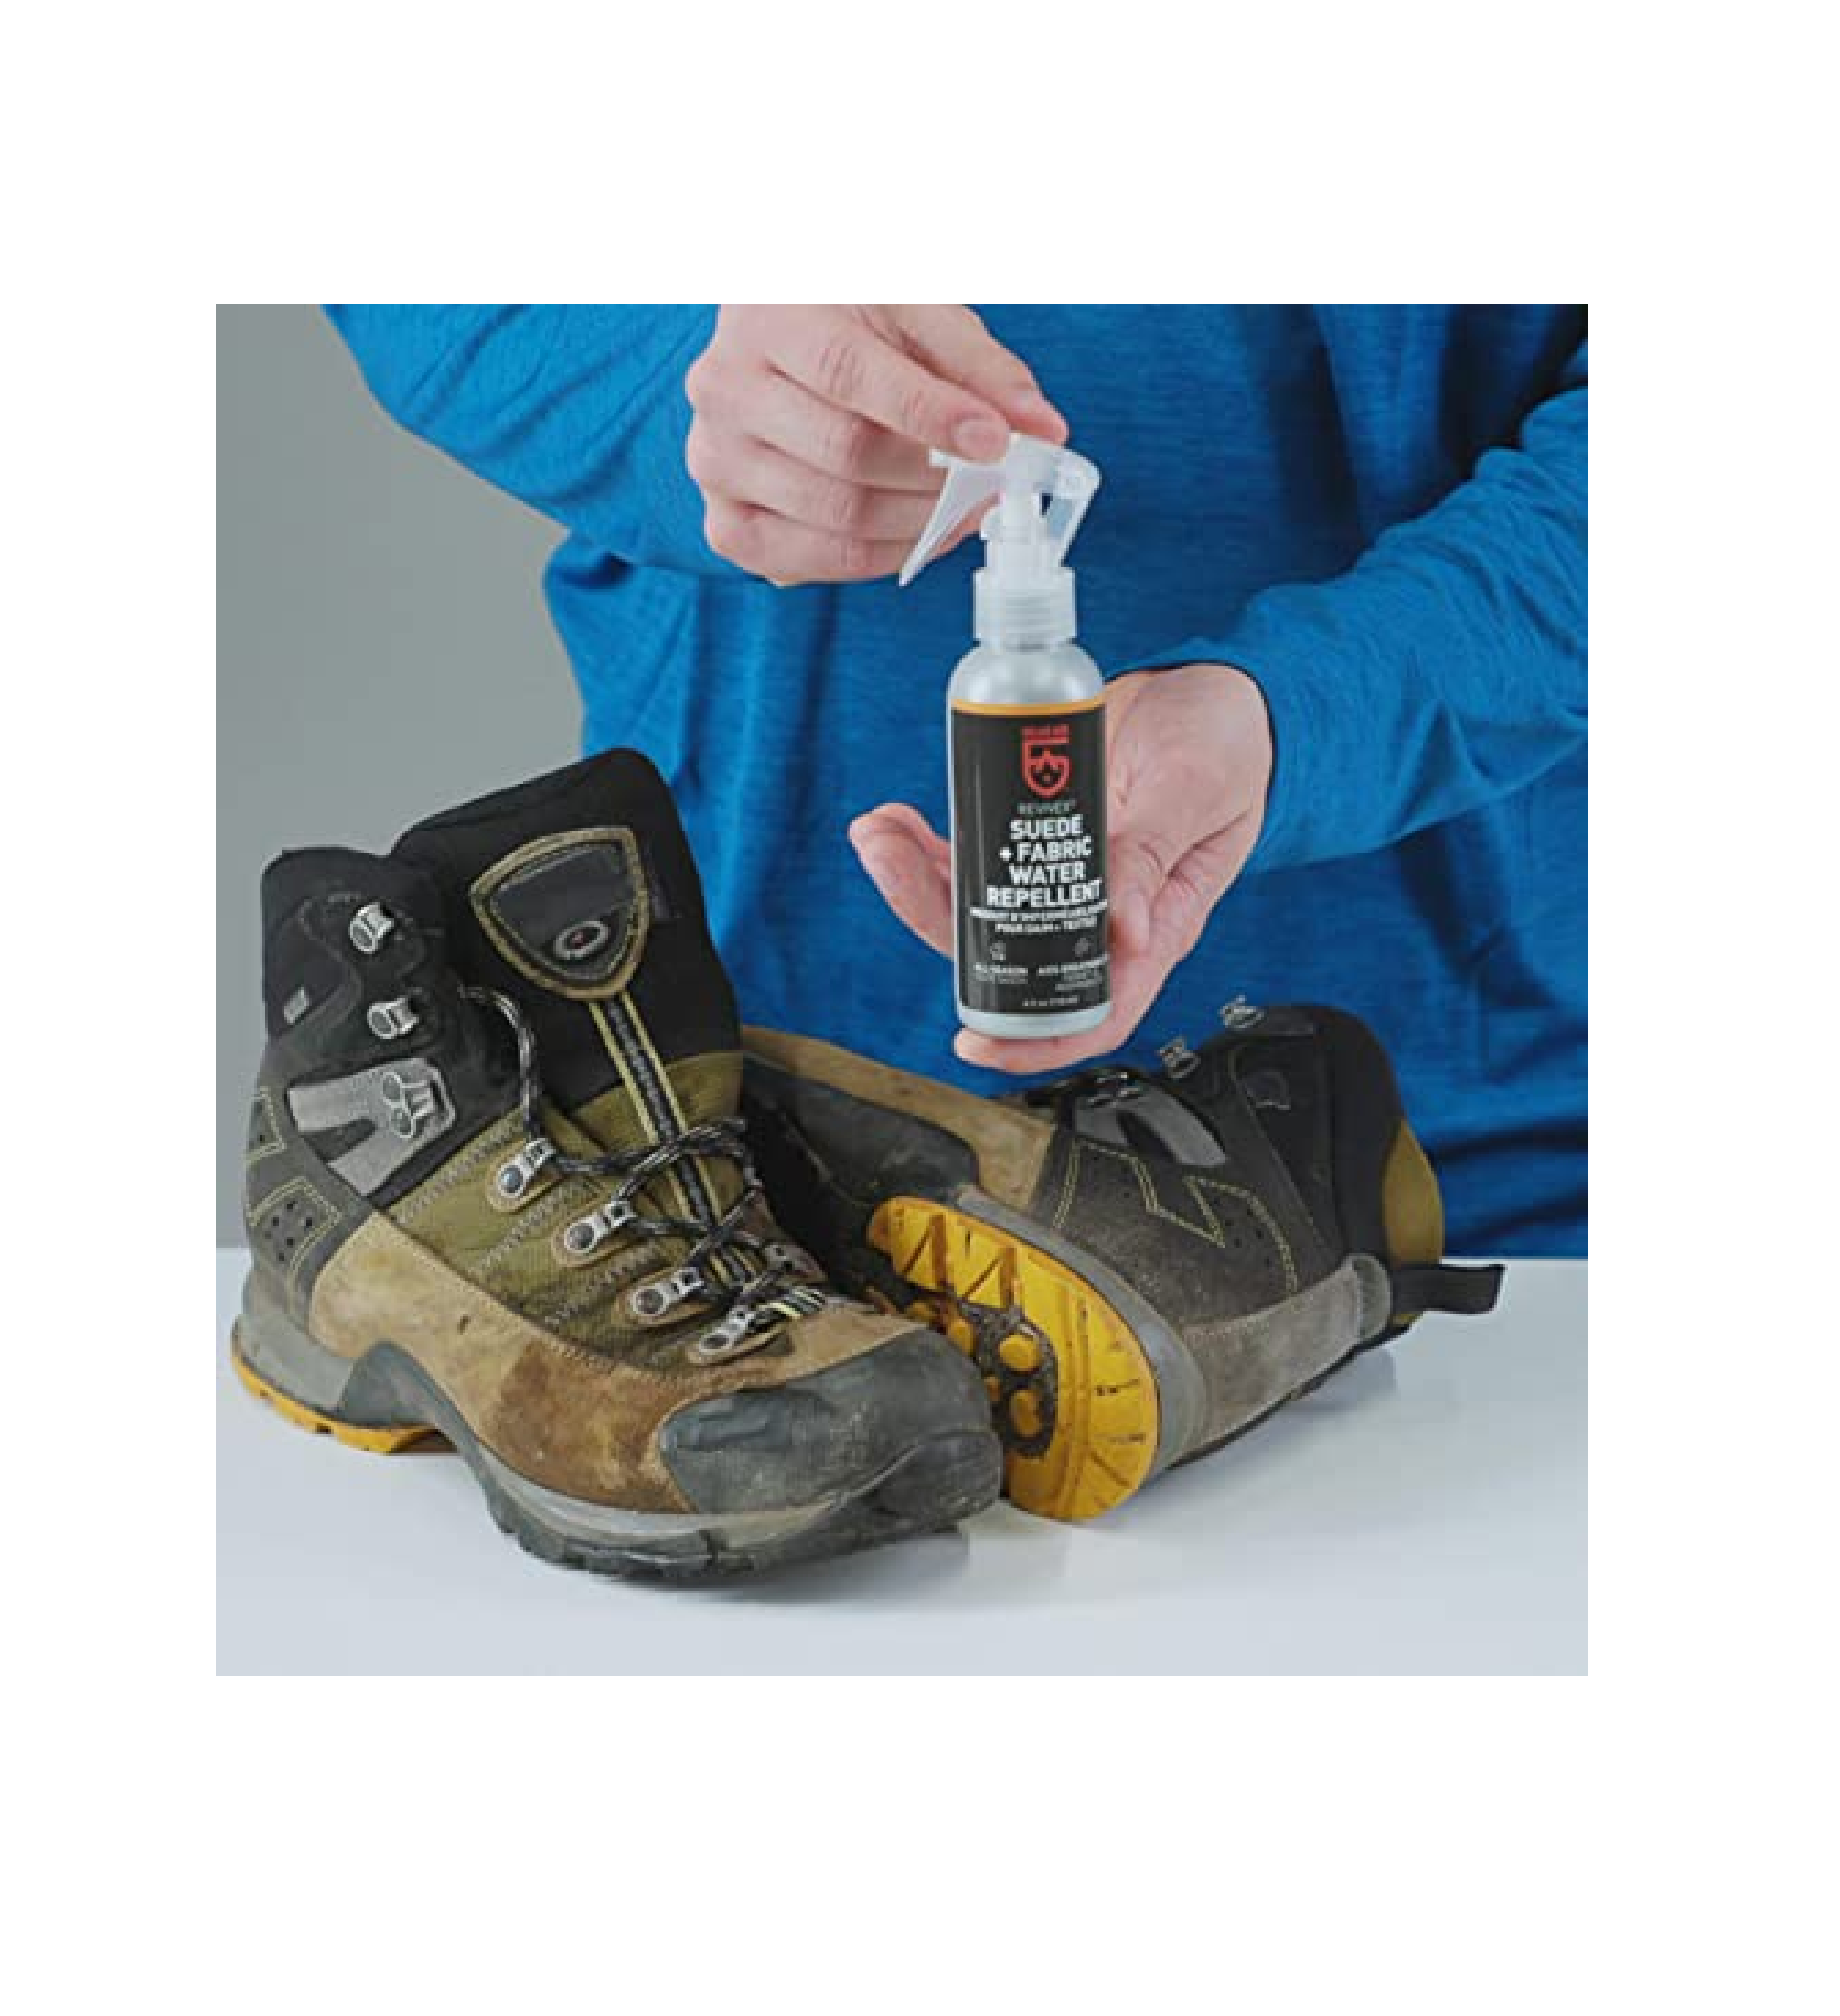 Gear Aid Revivex Spray On Waterproofing Footware Protection 4oz - 2 Pack 